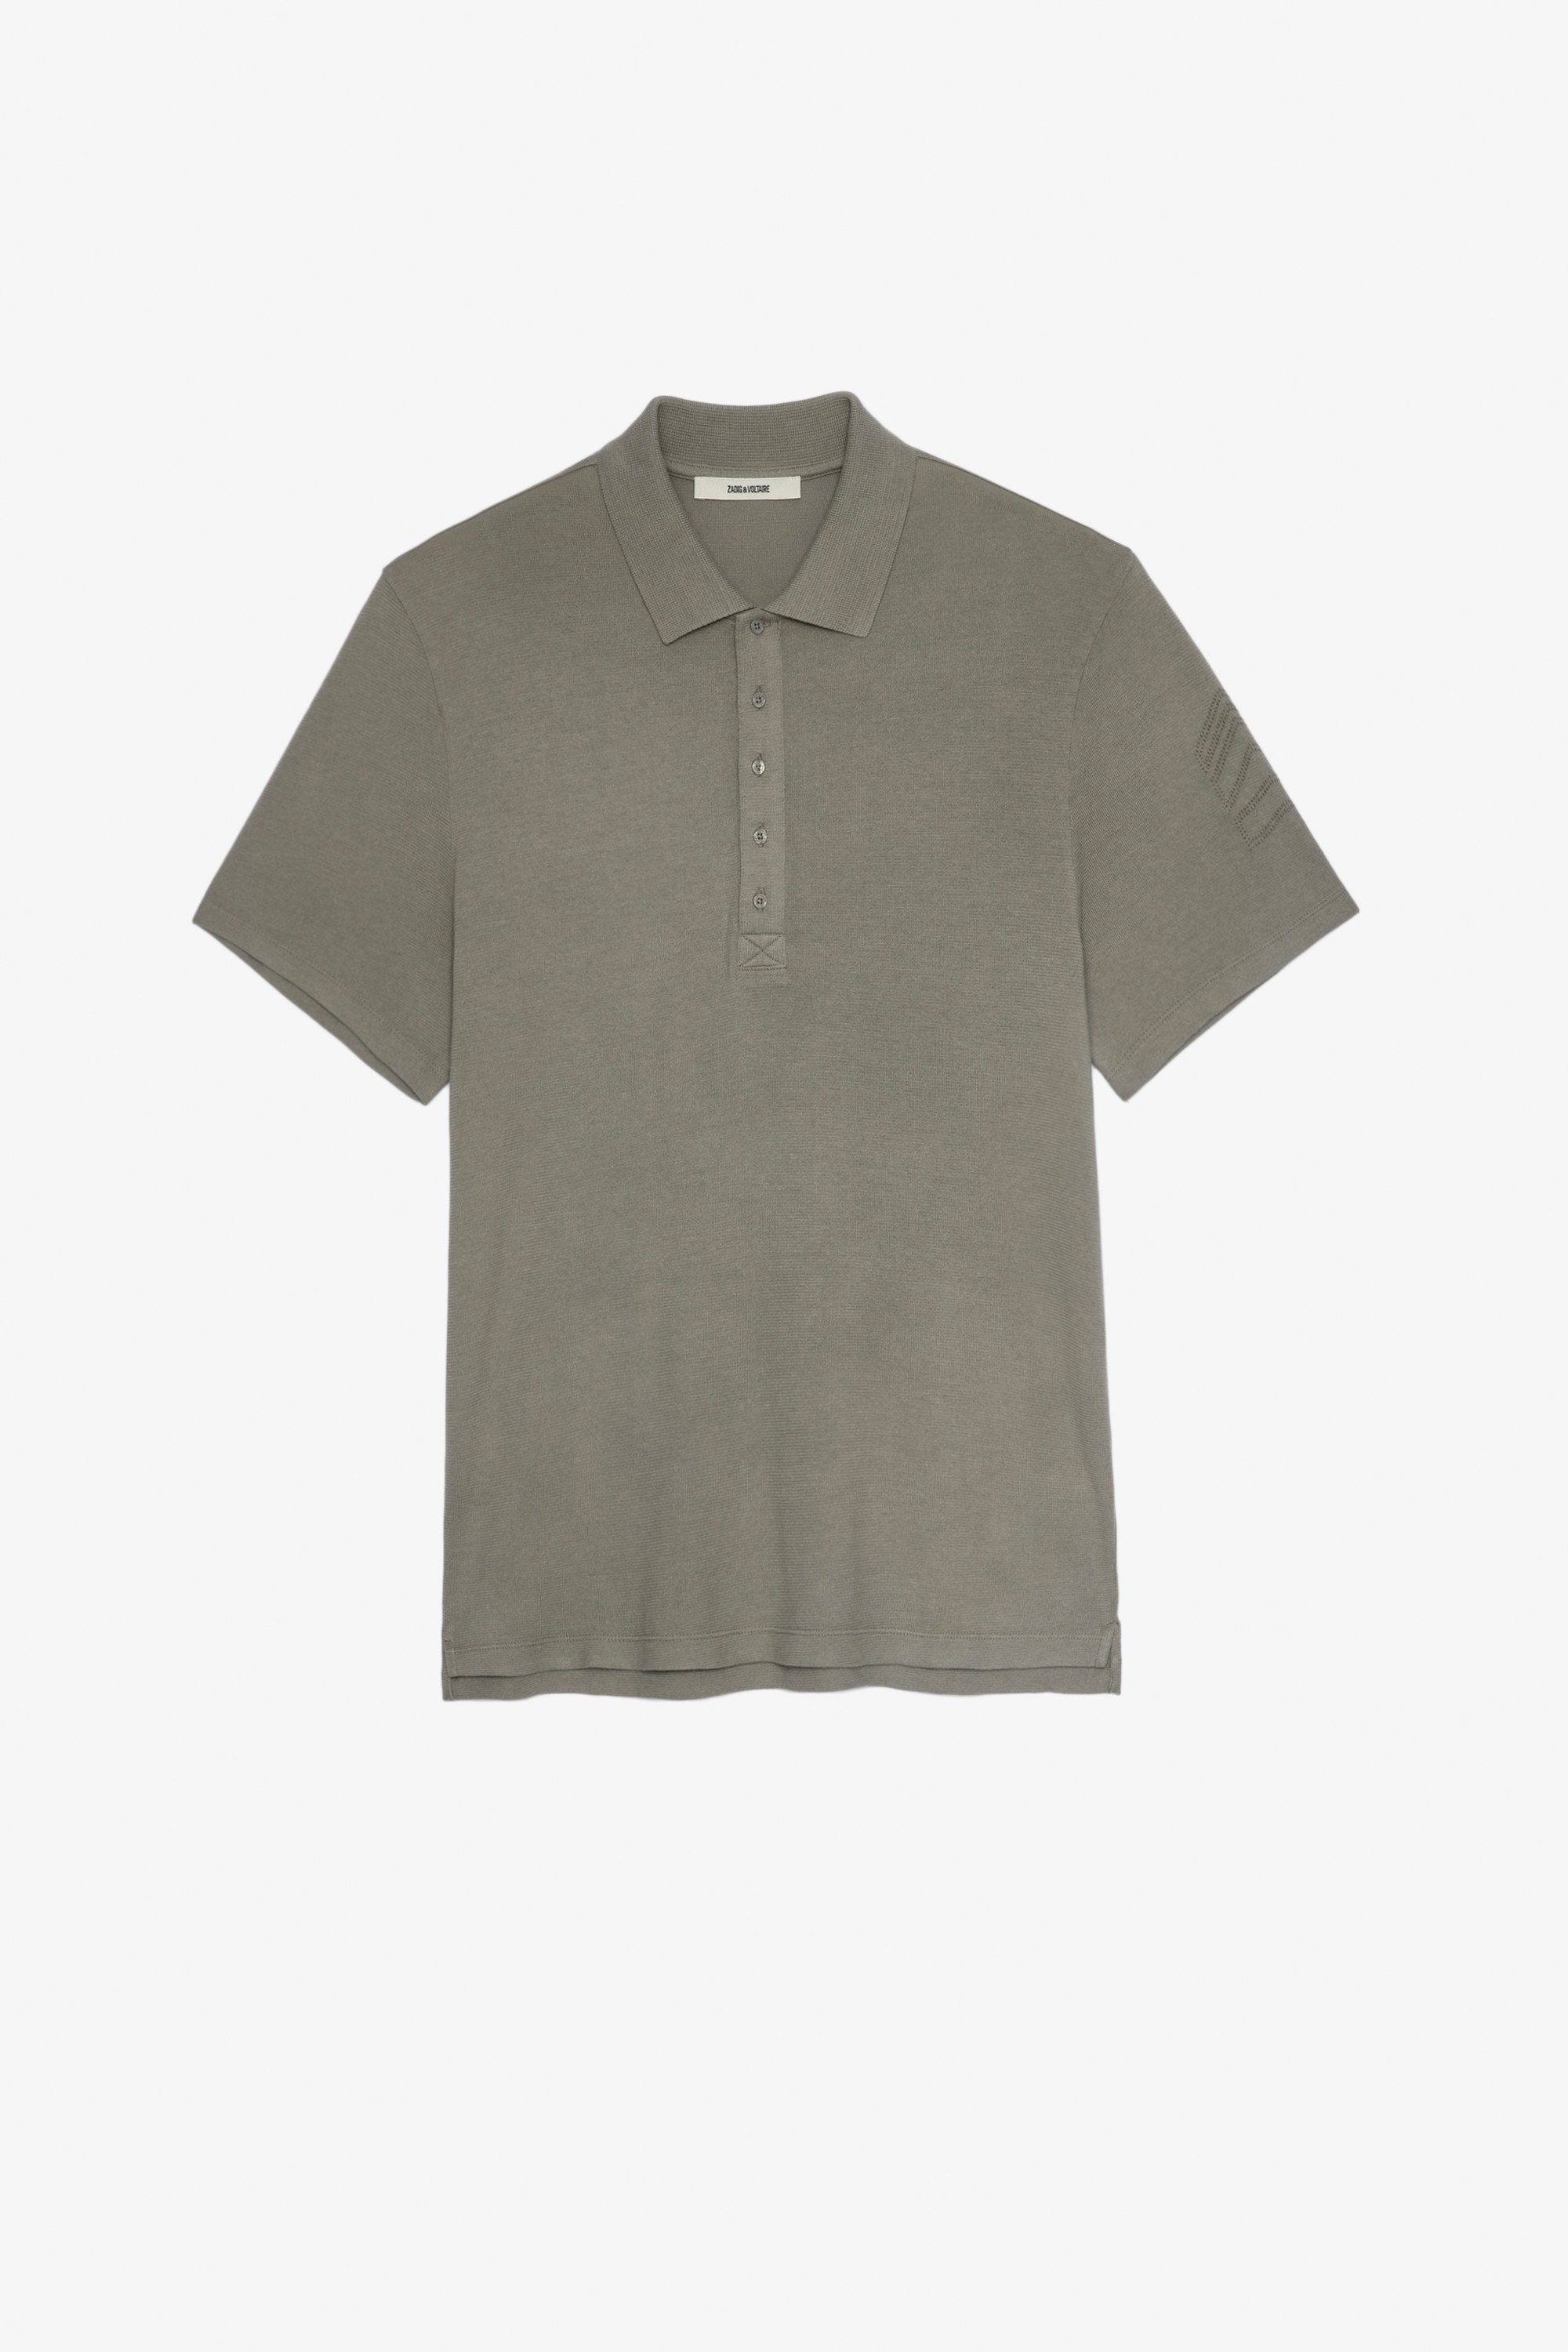 Dimitri T-Shirt Men's polo T-shirt in green cotton with button-down shirt collar